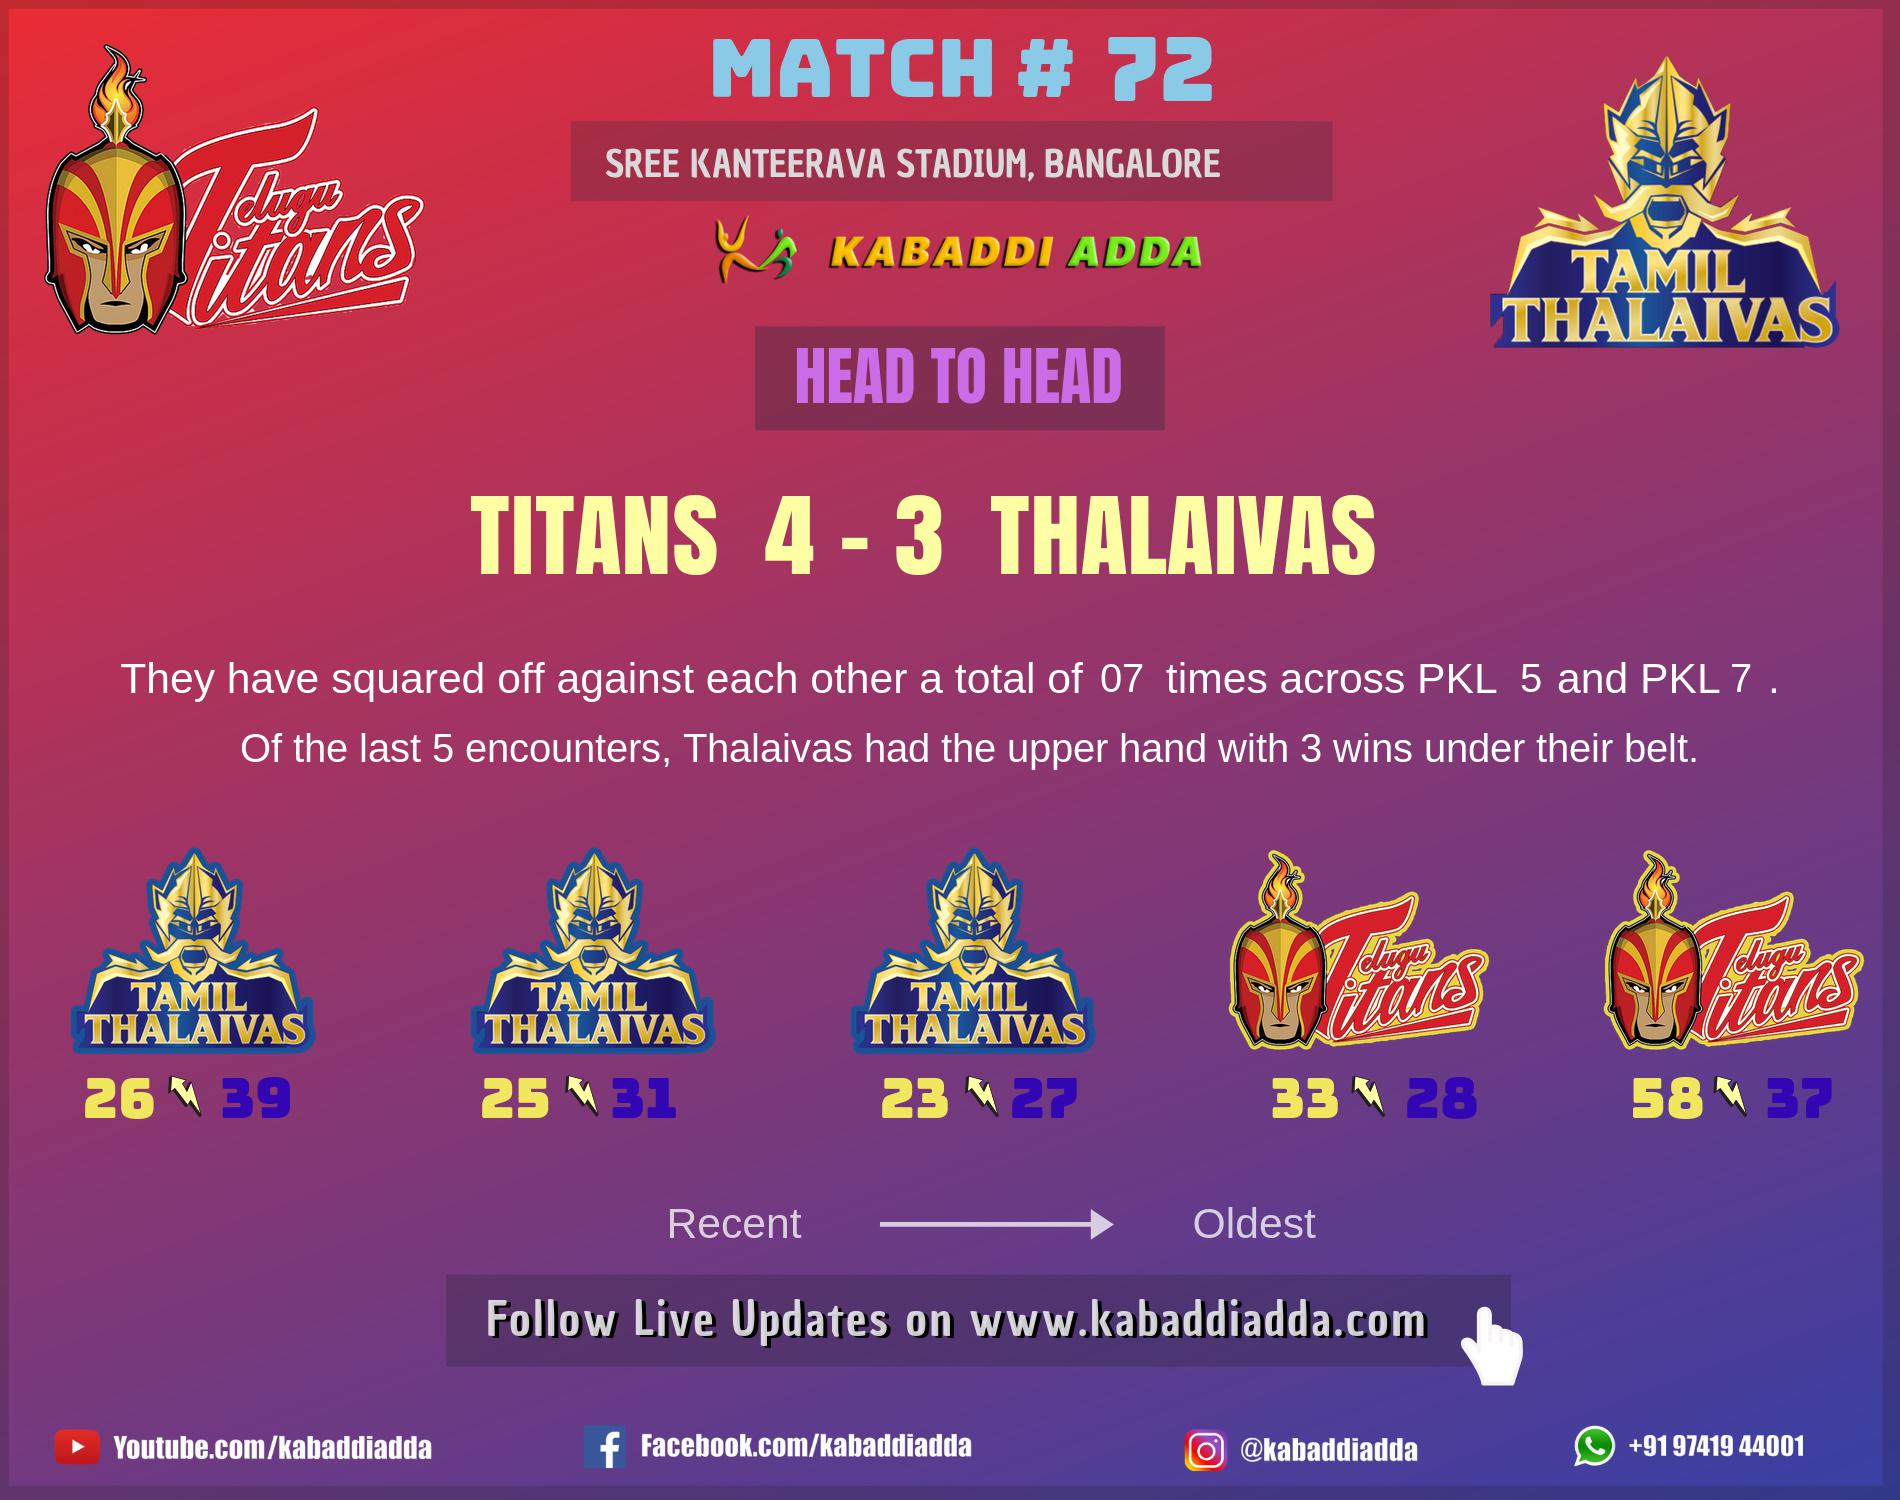 Telugu Titans is playing against Tamil Thalaivas 